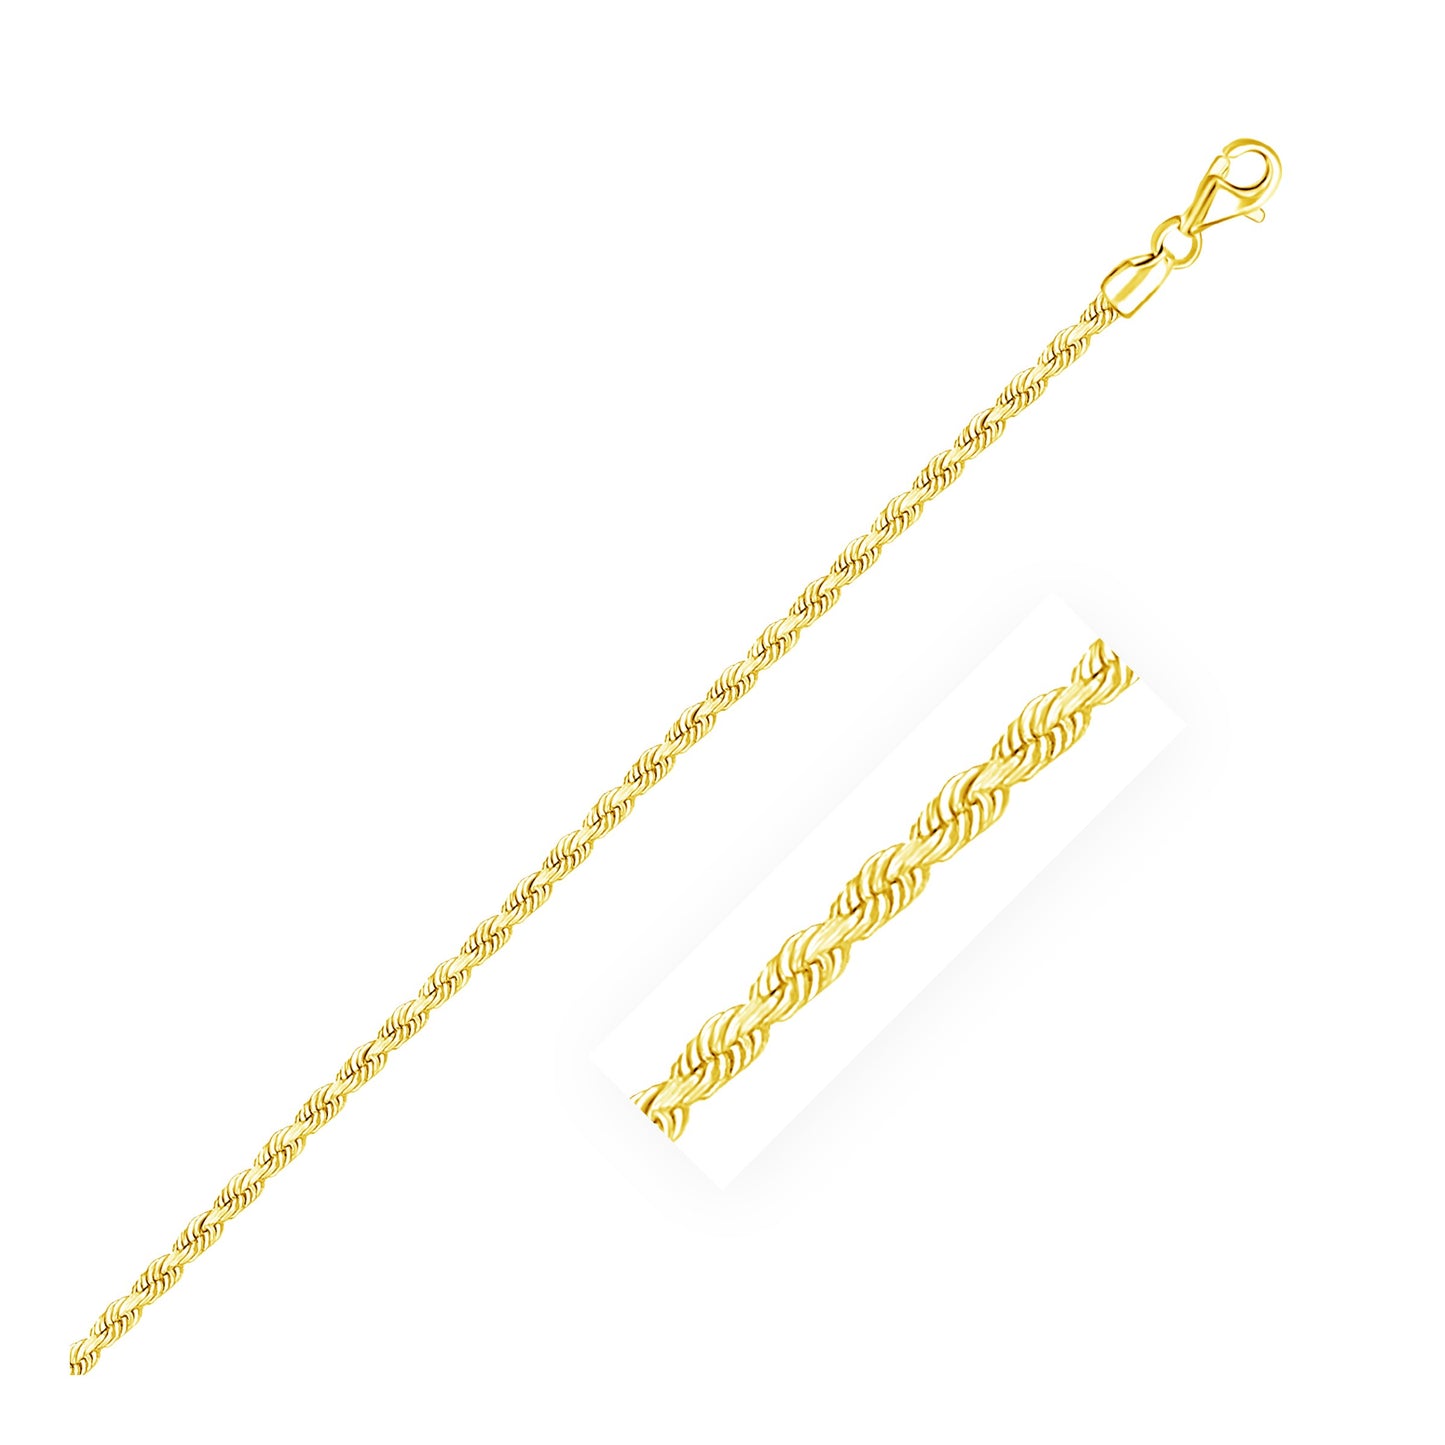 2.5mm 14k Yellow Gold Solid Diamond Cut Rope Bracelet